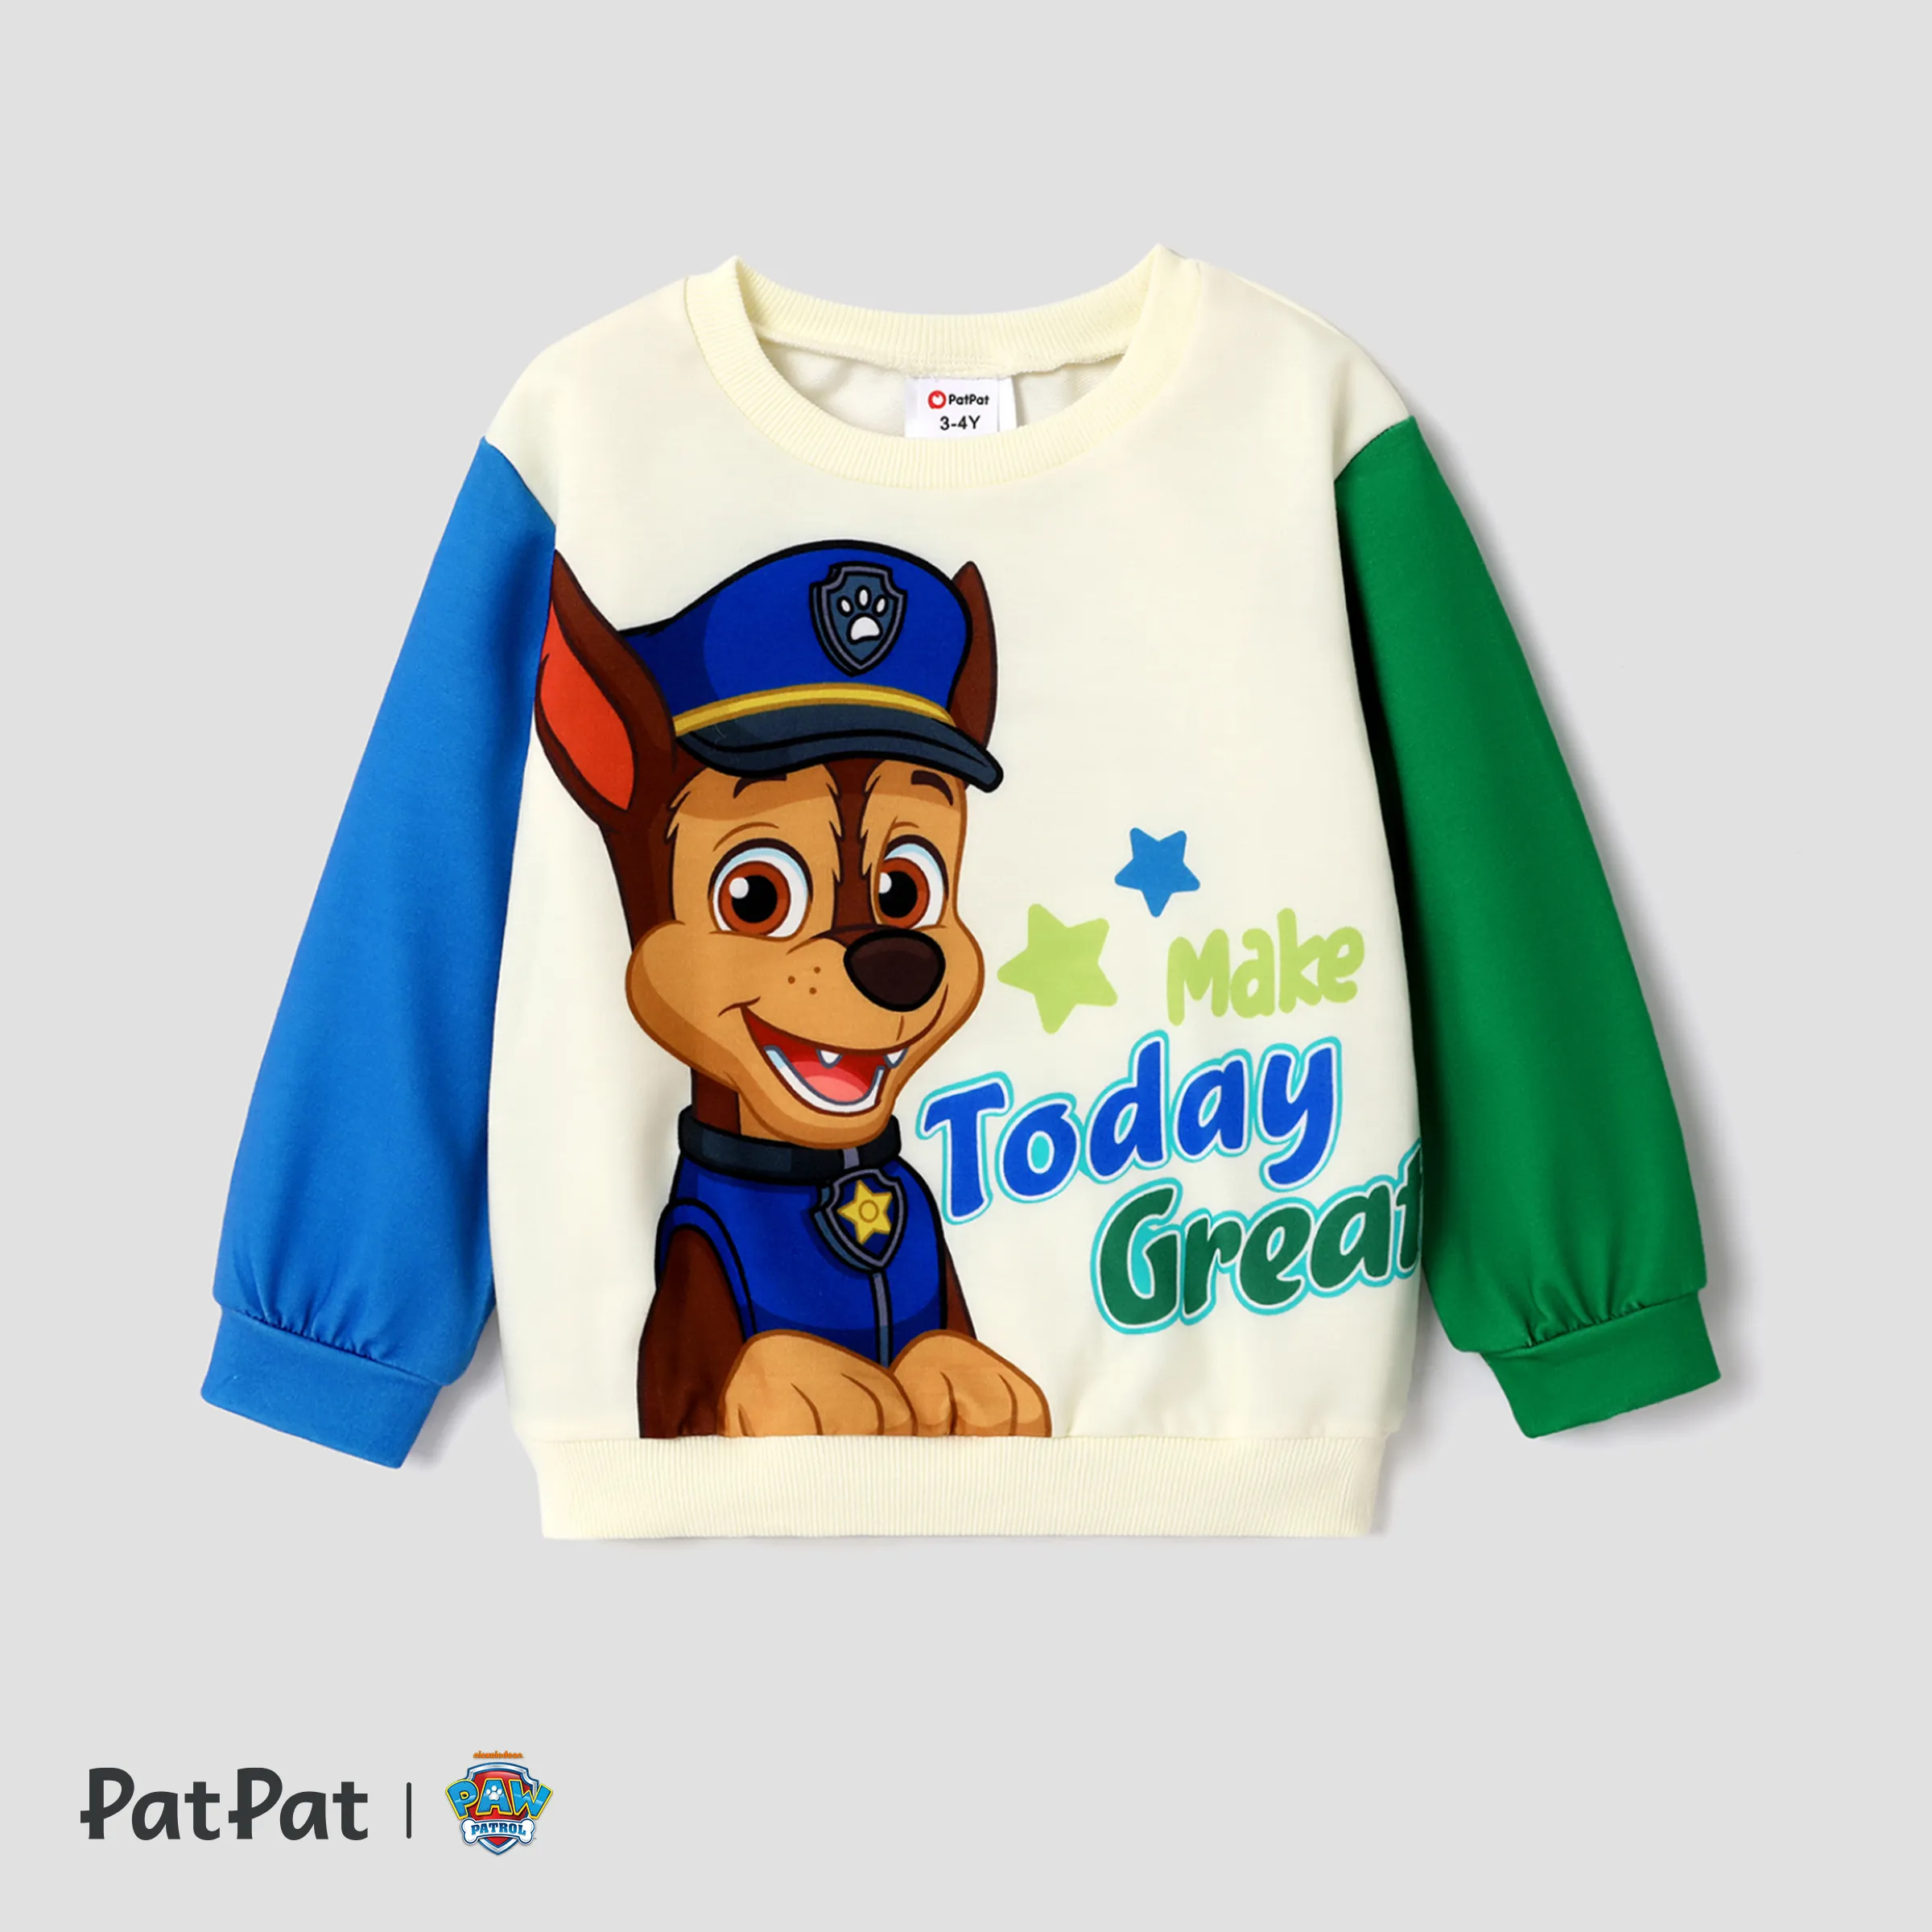 PAW Patrol Toddler Boy/Girl Character Print Colorblock Cotton Pullover Sweatshirt